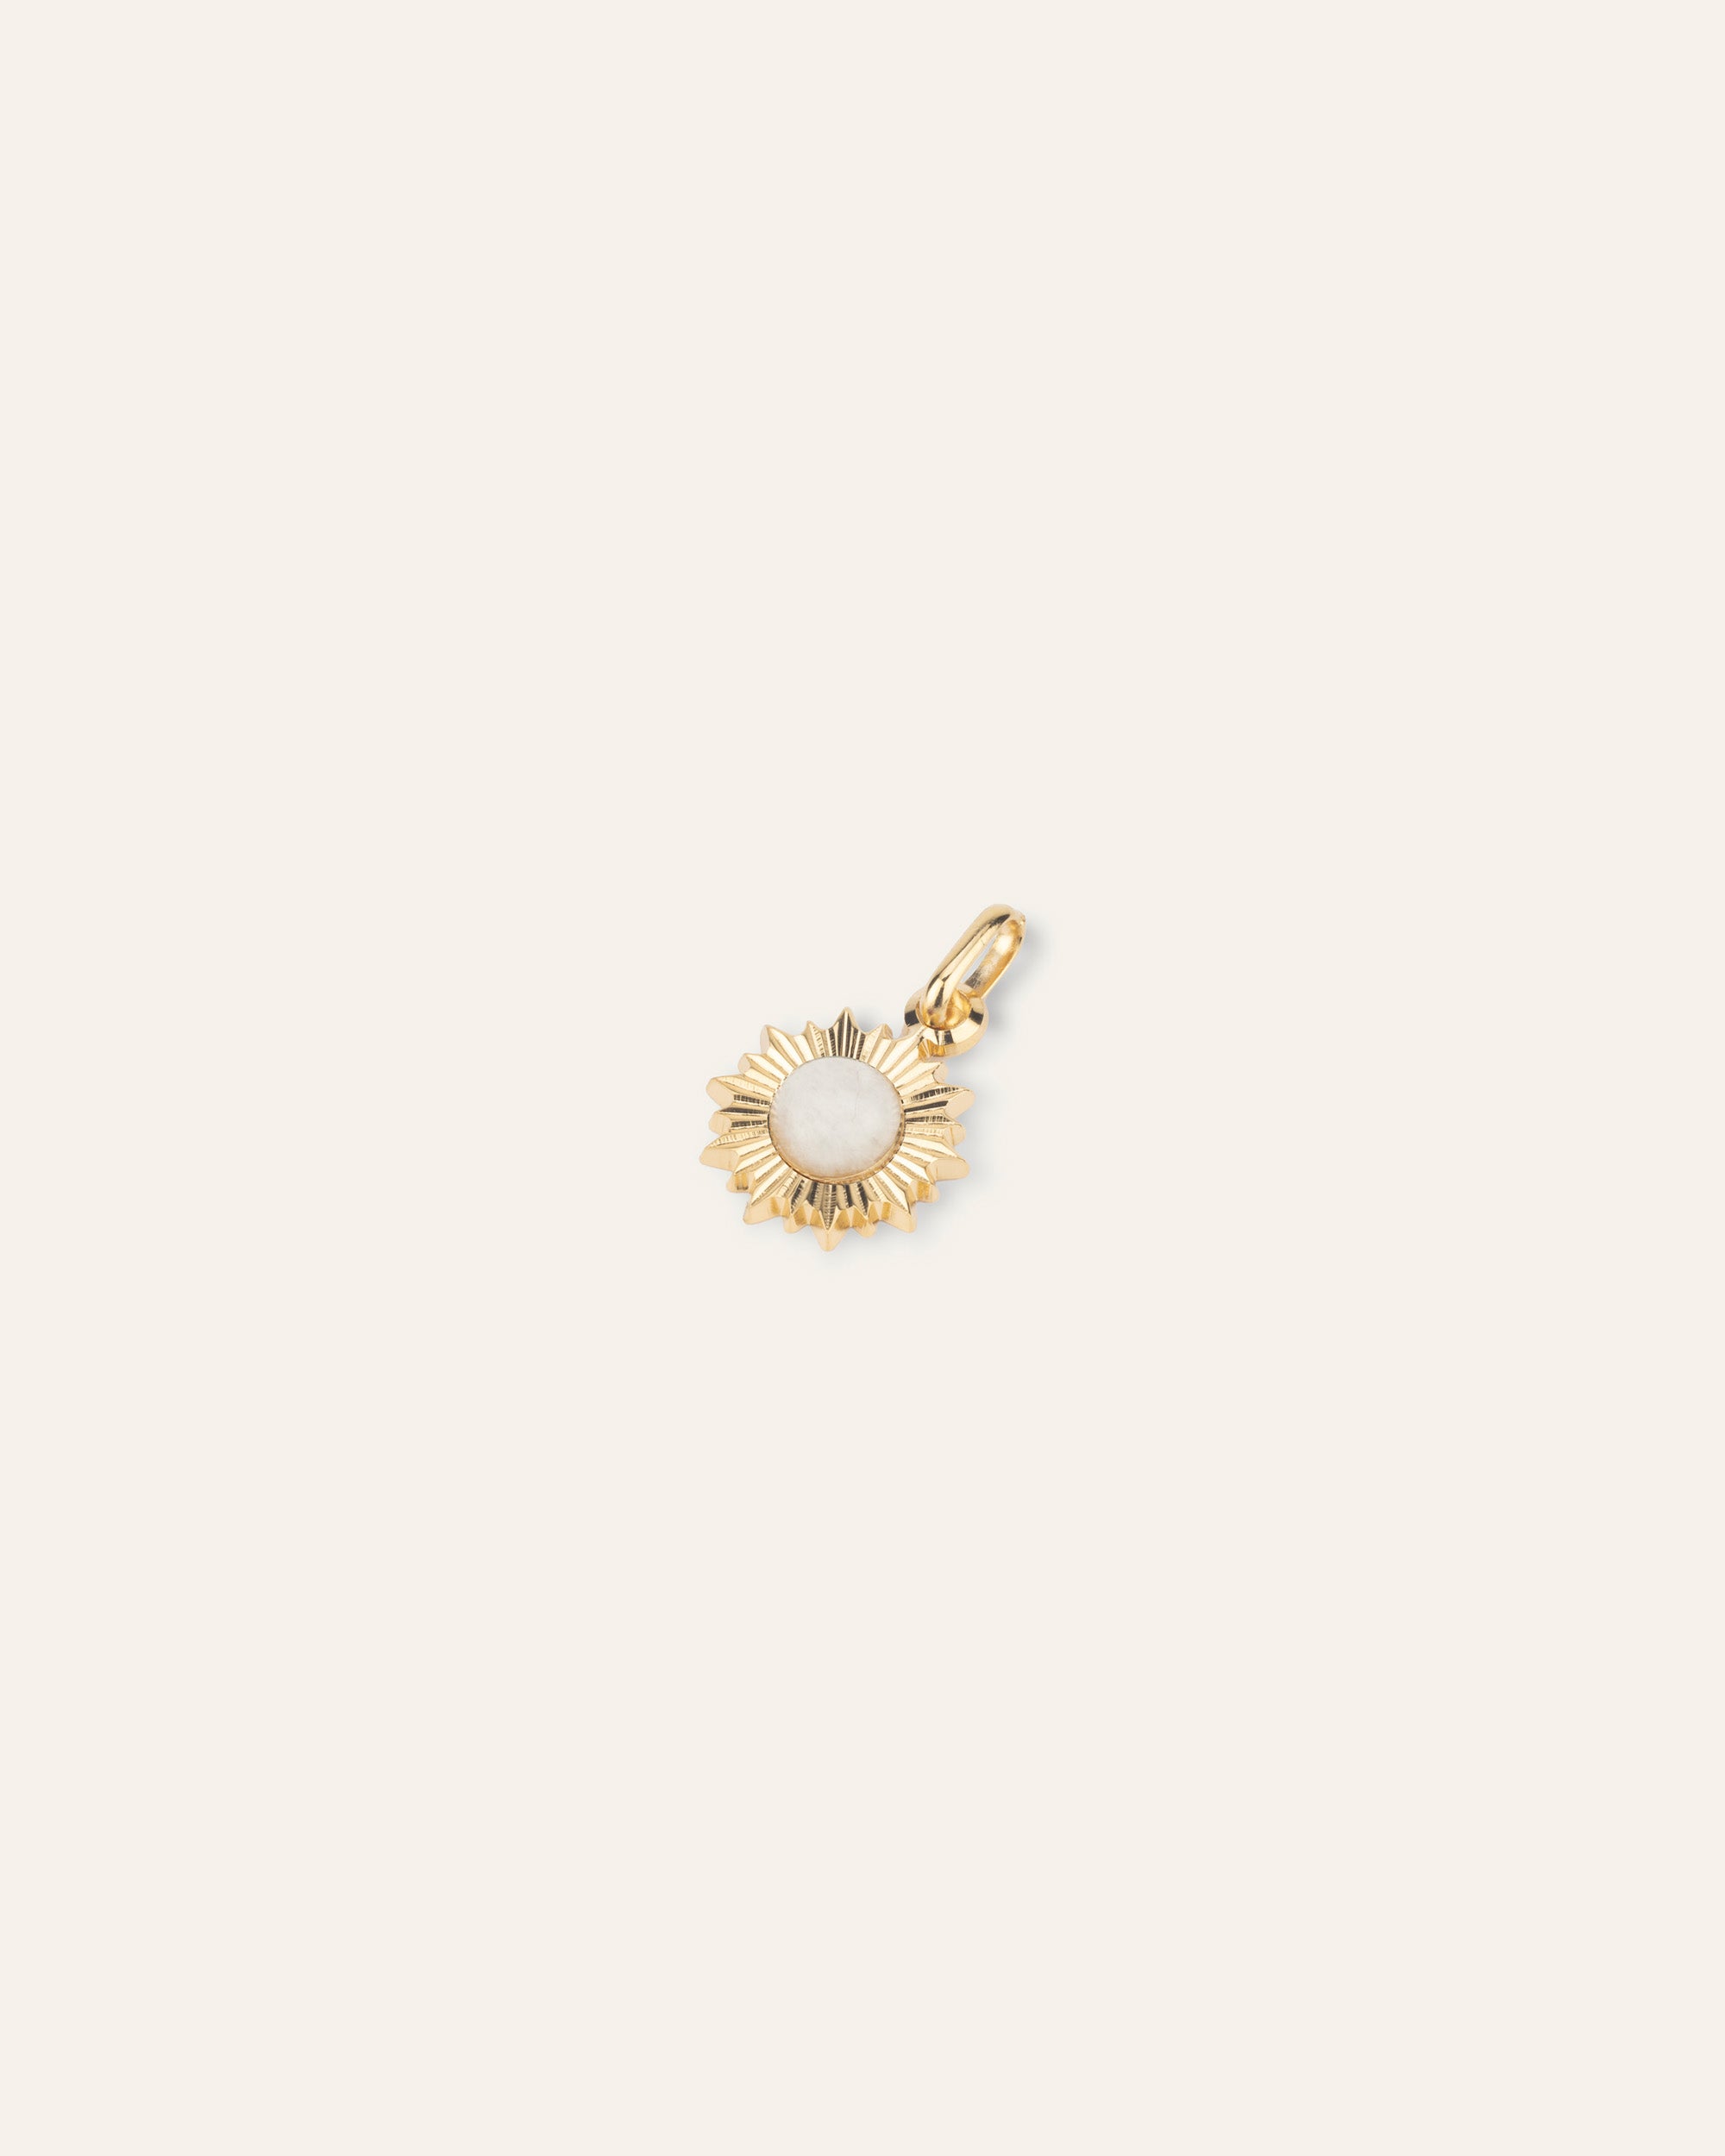 Ilios gold and moonstone pendant